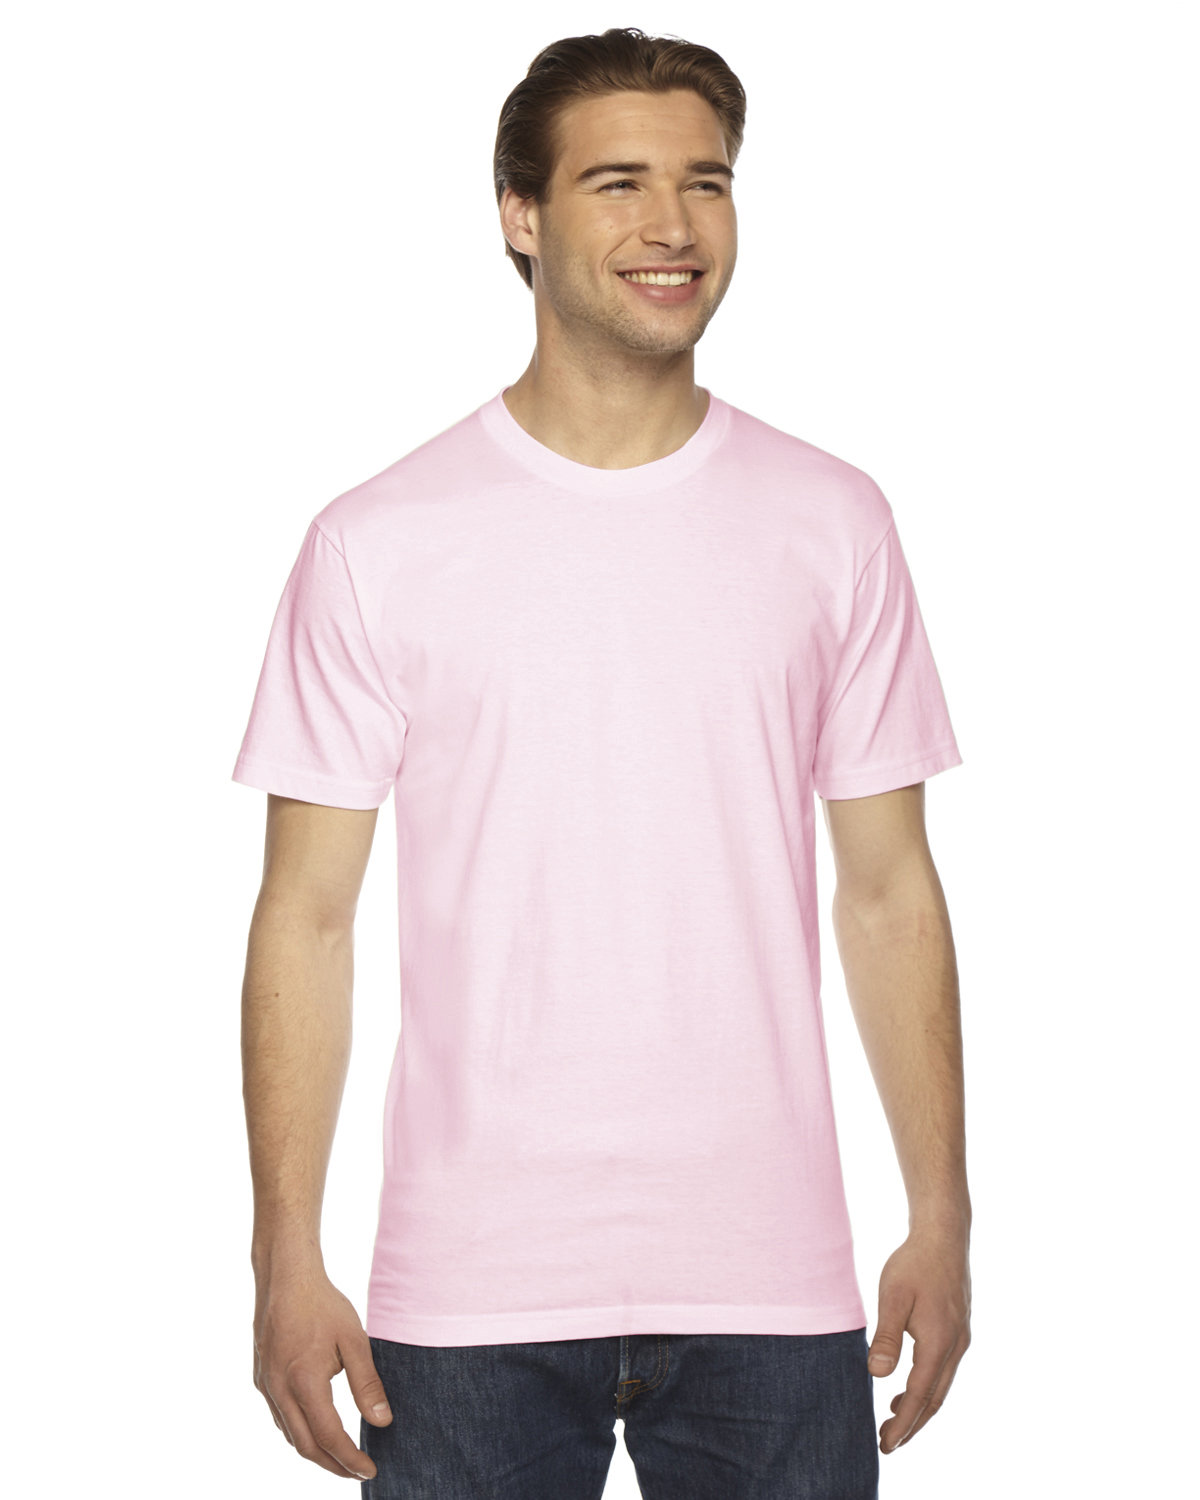 American Apparel Unisex Fine Jersey Short-Sleeve T-Shirt LIGHT PINK 